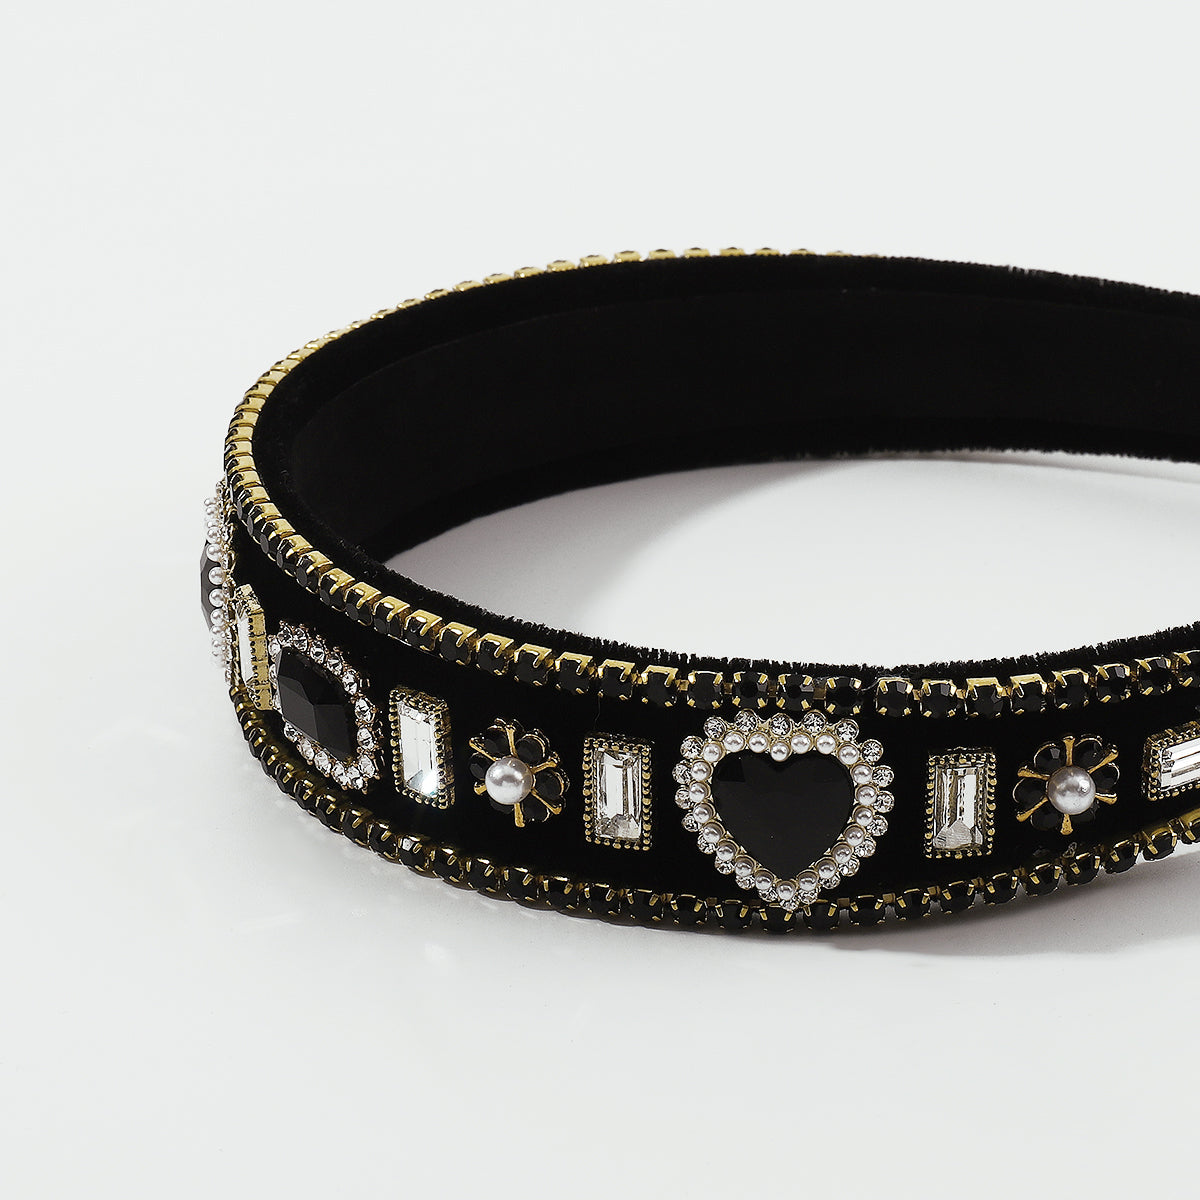 Crystal Heart w/Pearls Crown Headband medyjewelry